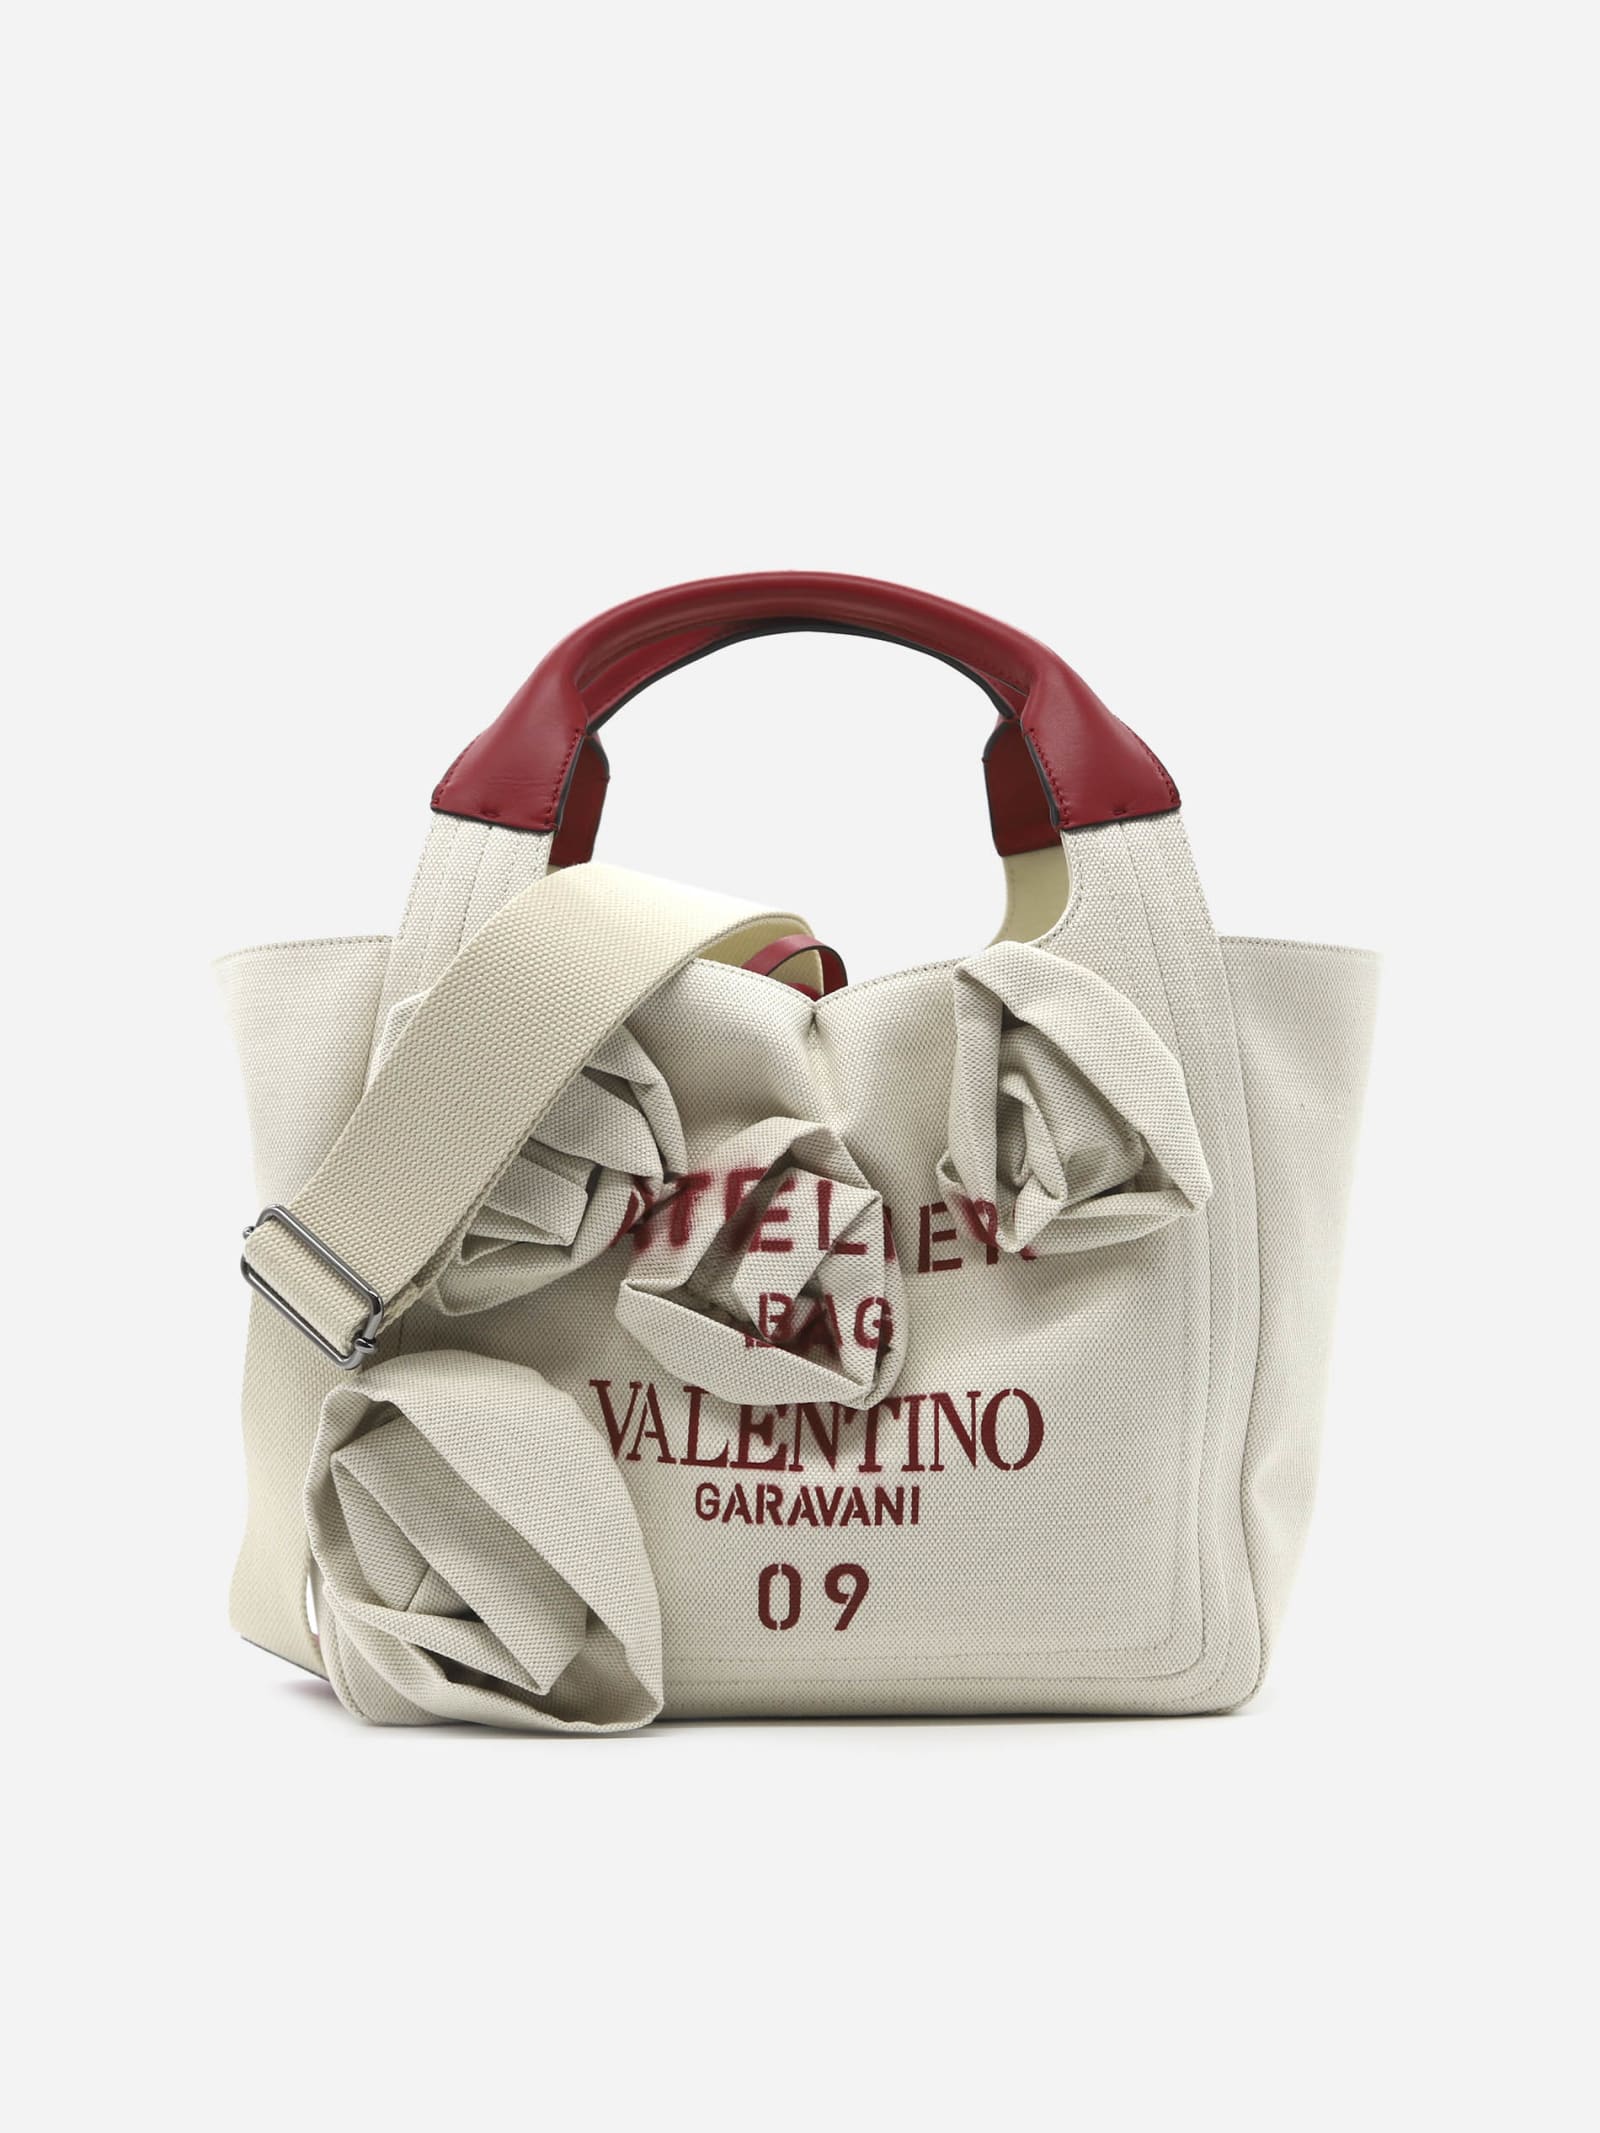 Valentino Garavani Atelier 09 Blossom Edition Canvas Bag